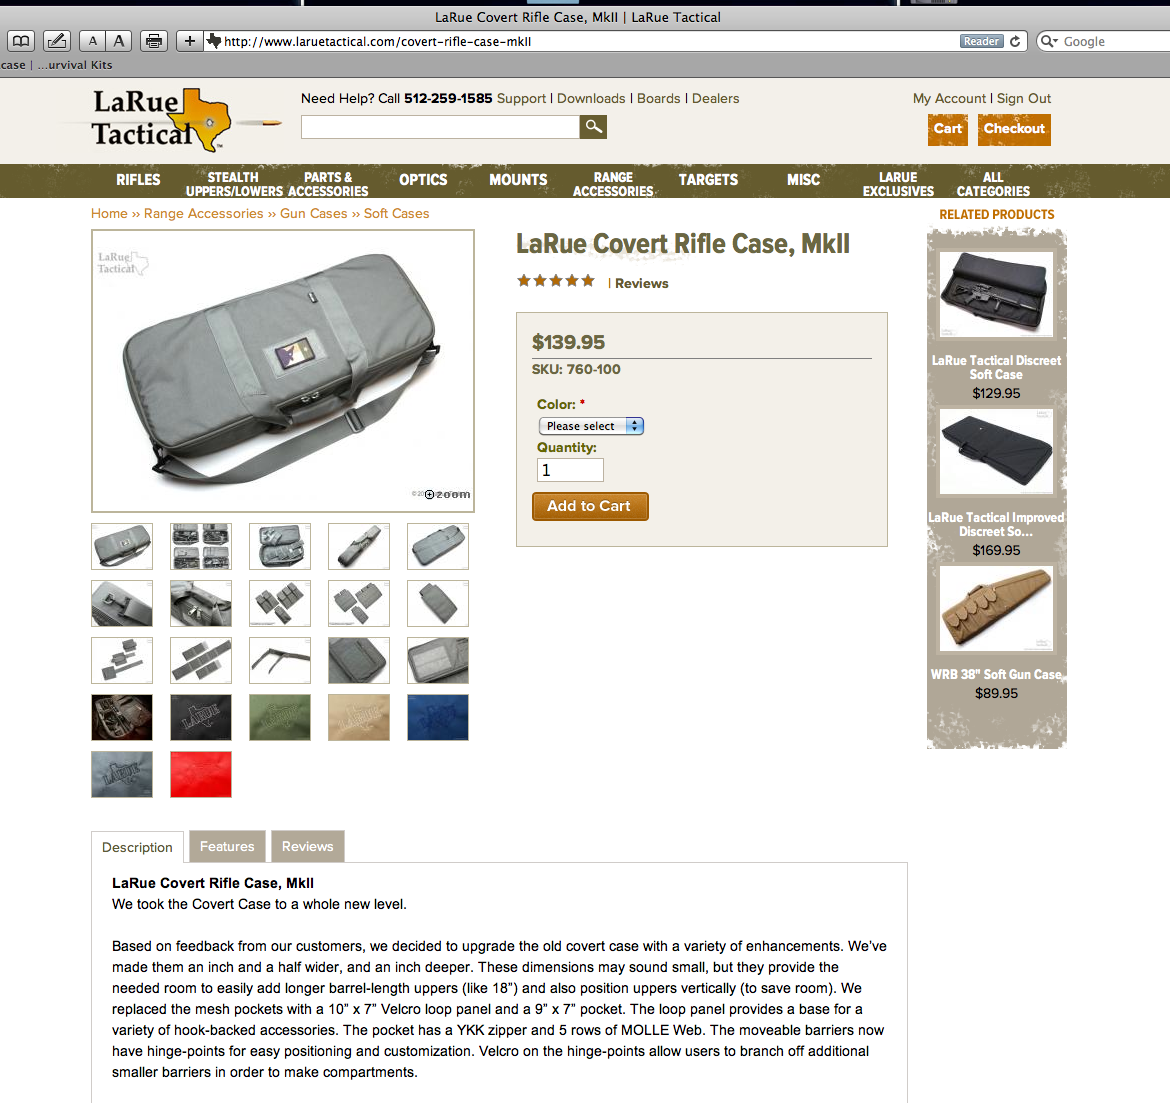 LaRue Covert Rifle Case Information copy 2.png